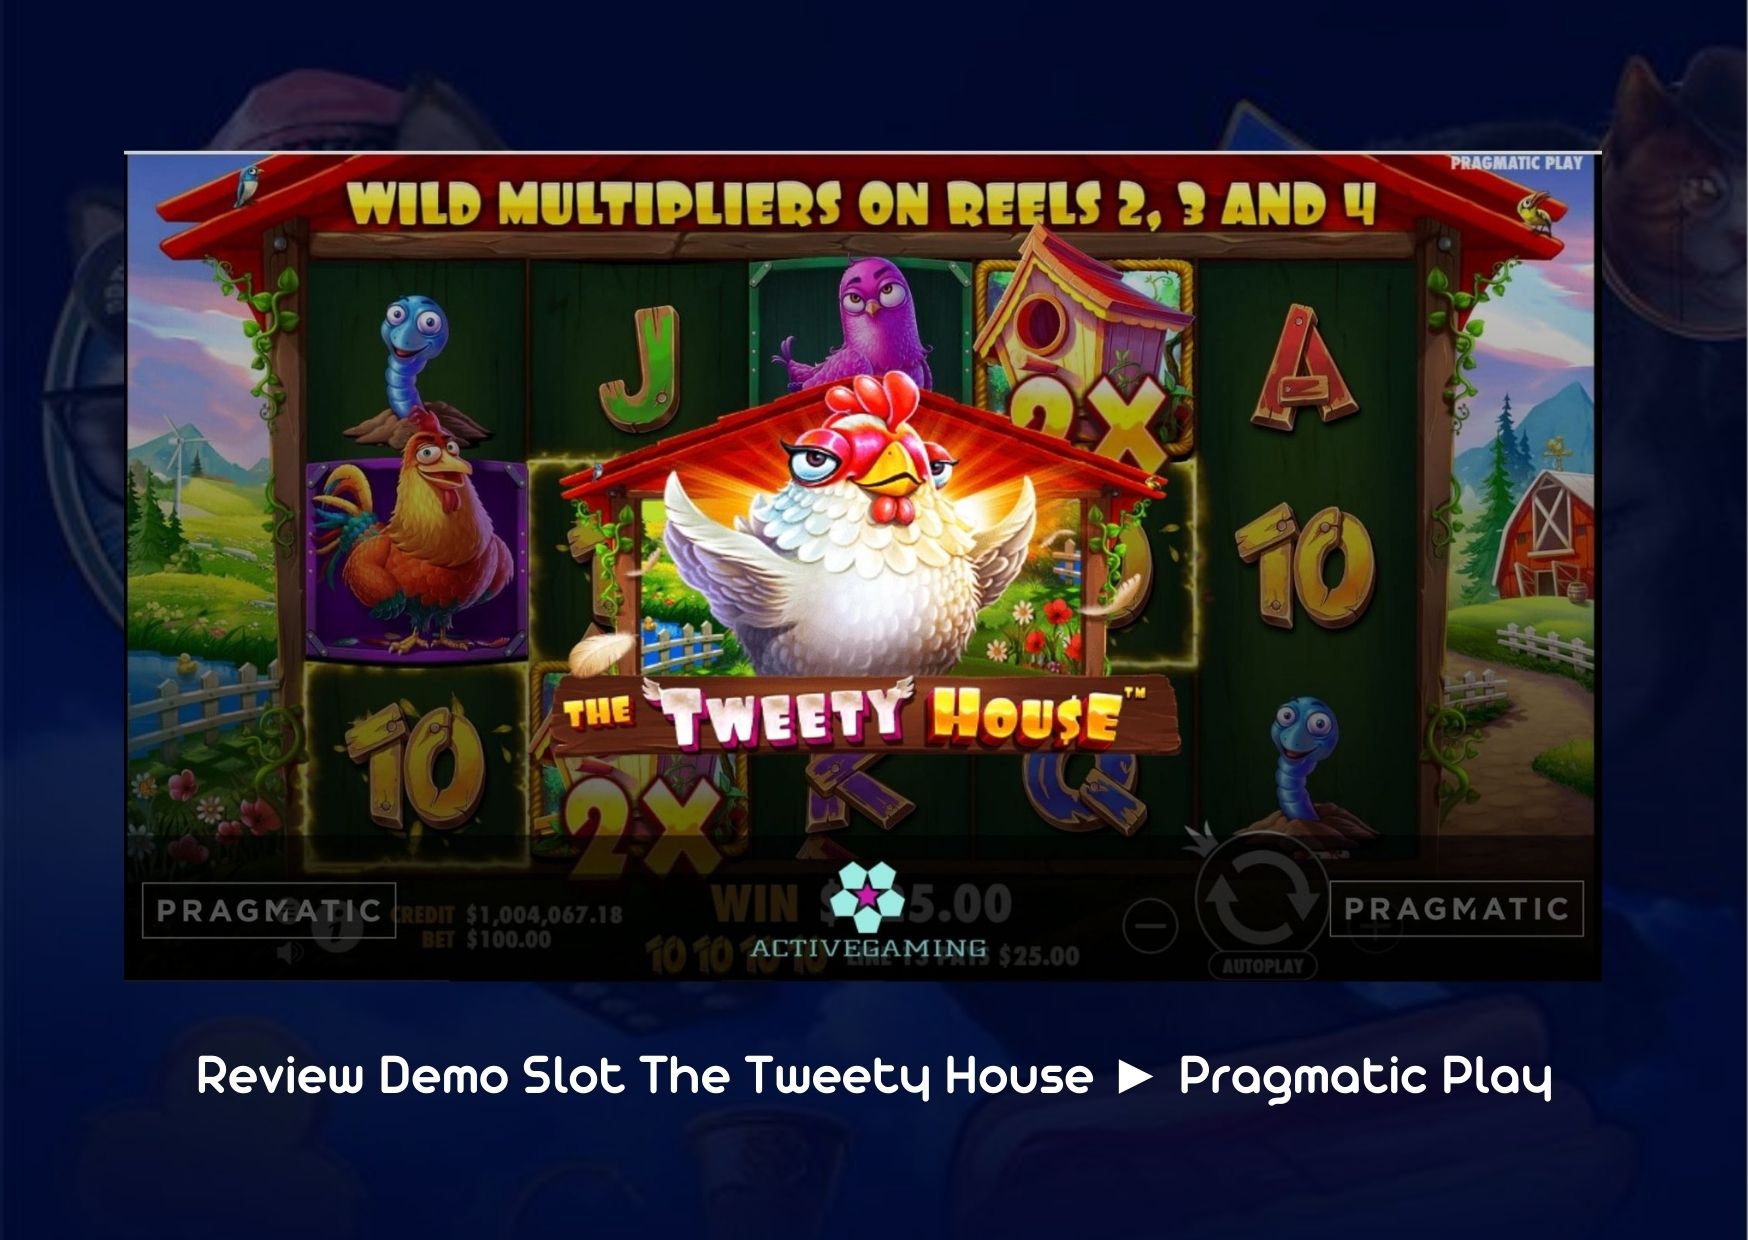 Review Demo Slot The Tweety House ► Pragmatic Play